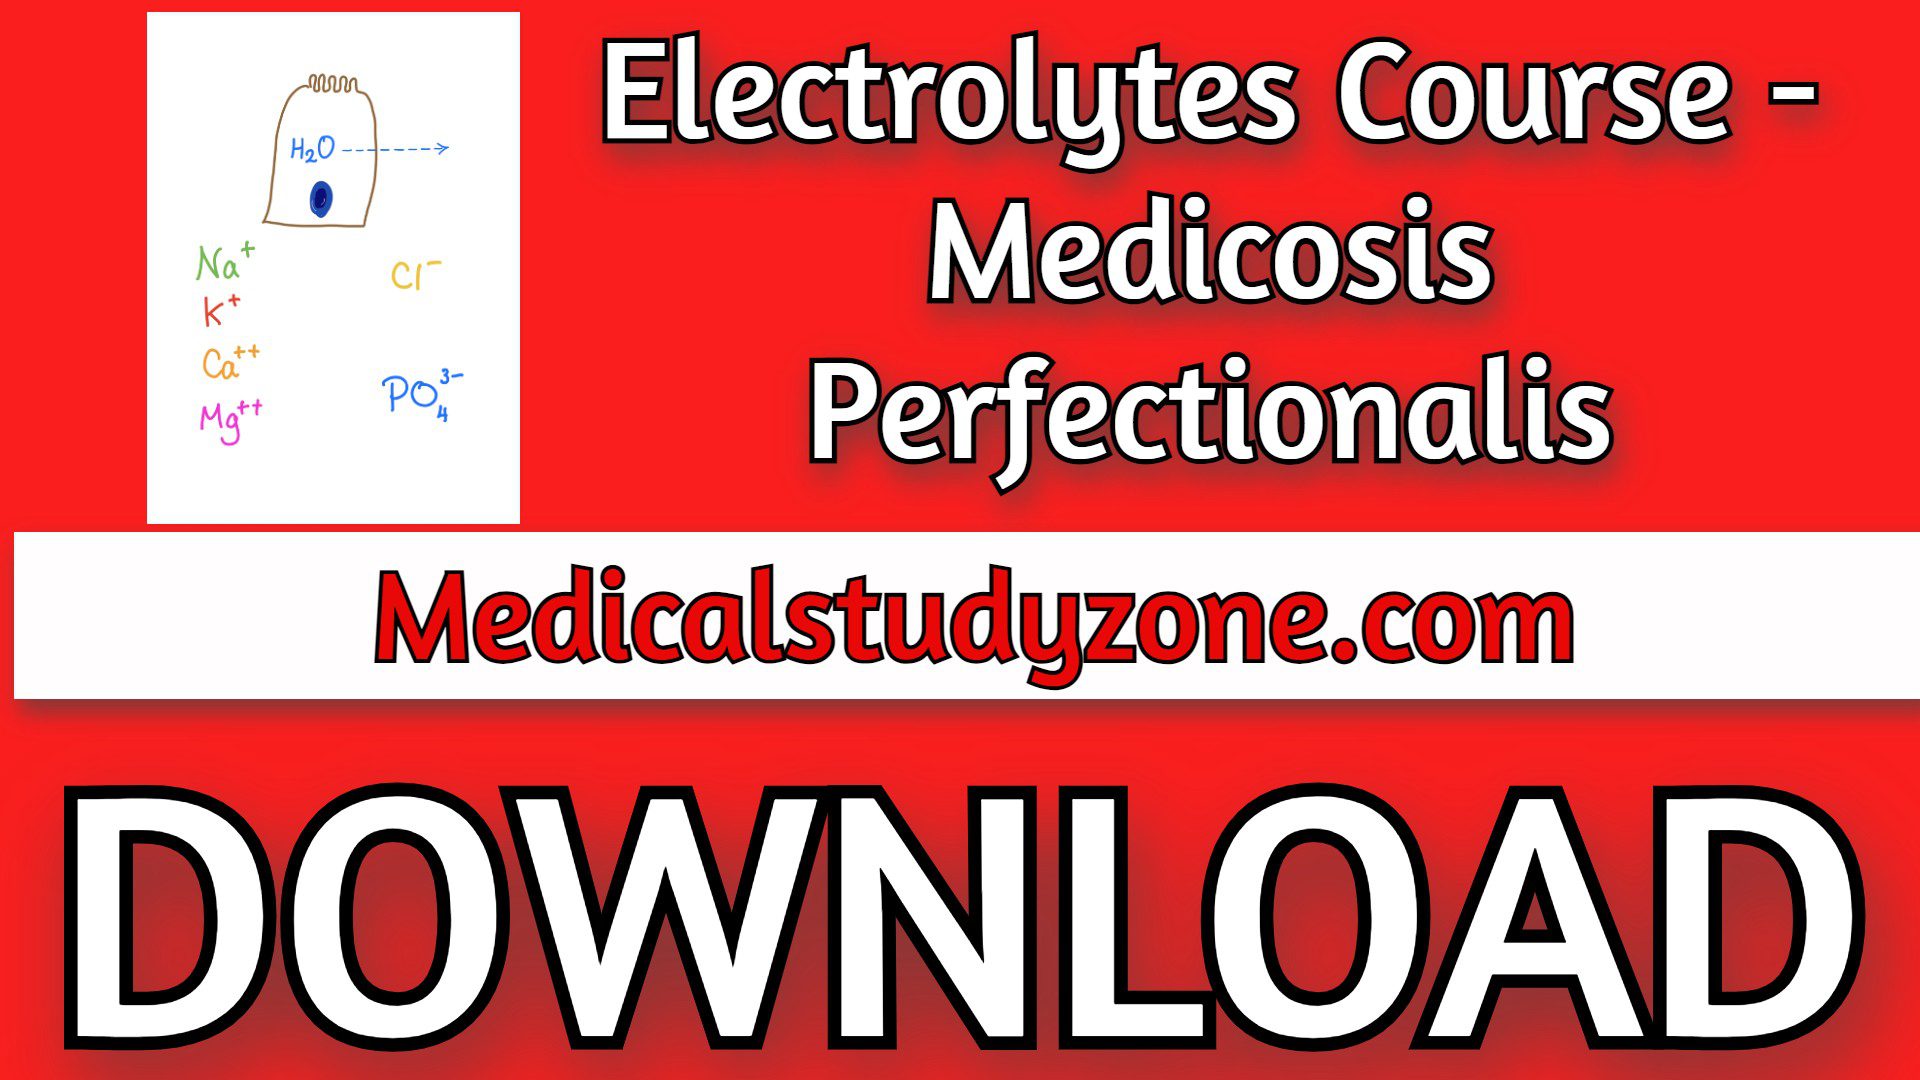 Electrolytes Course 2022 - Medicosis Perfectionalis Free Download